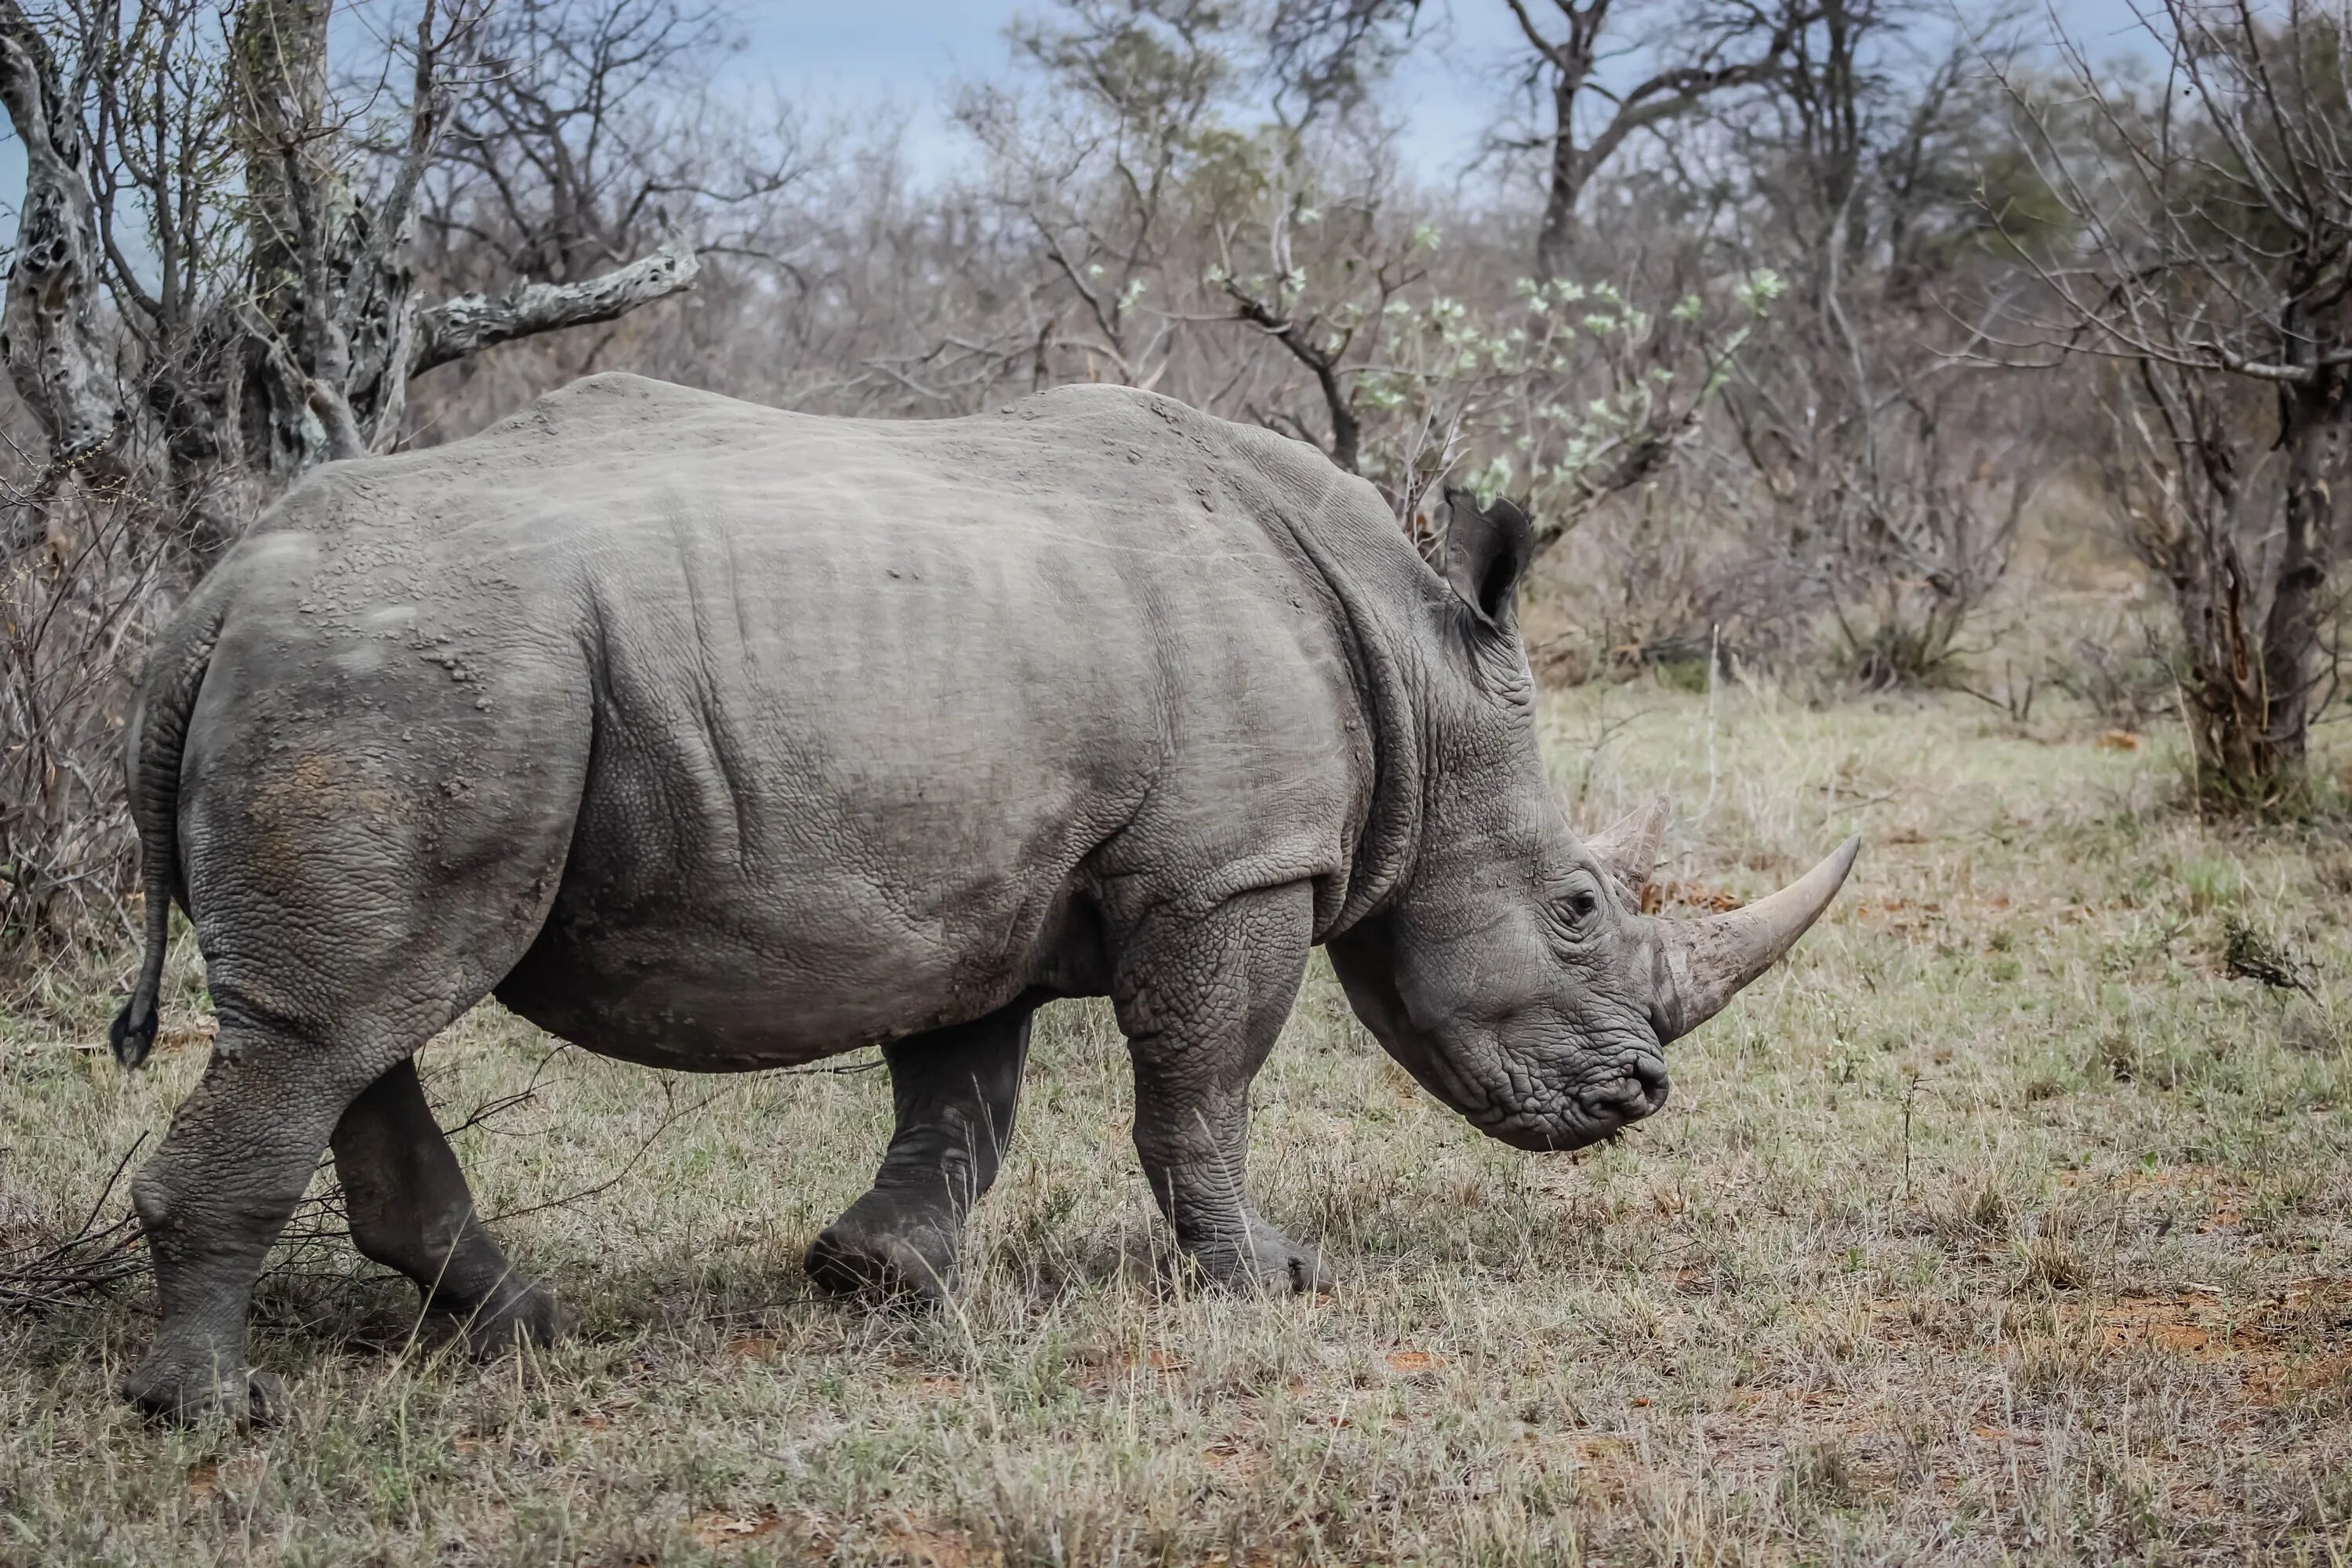 Африка Саванна носорог. Суматранский носорог спаривания. Африканский носорог и индийский носорог. Носорог Эфиопский. Носорог цвет